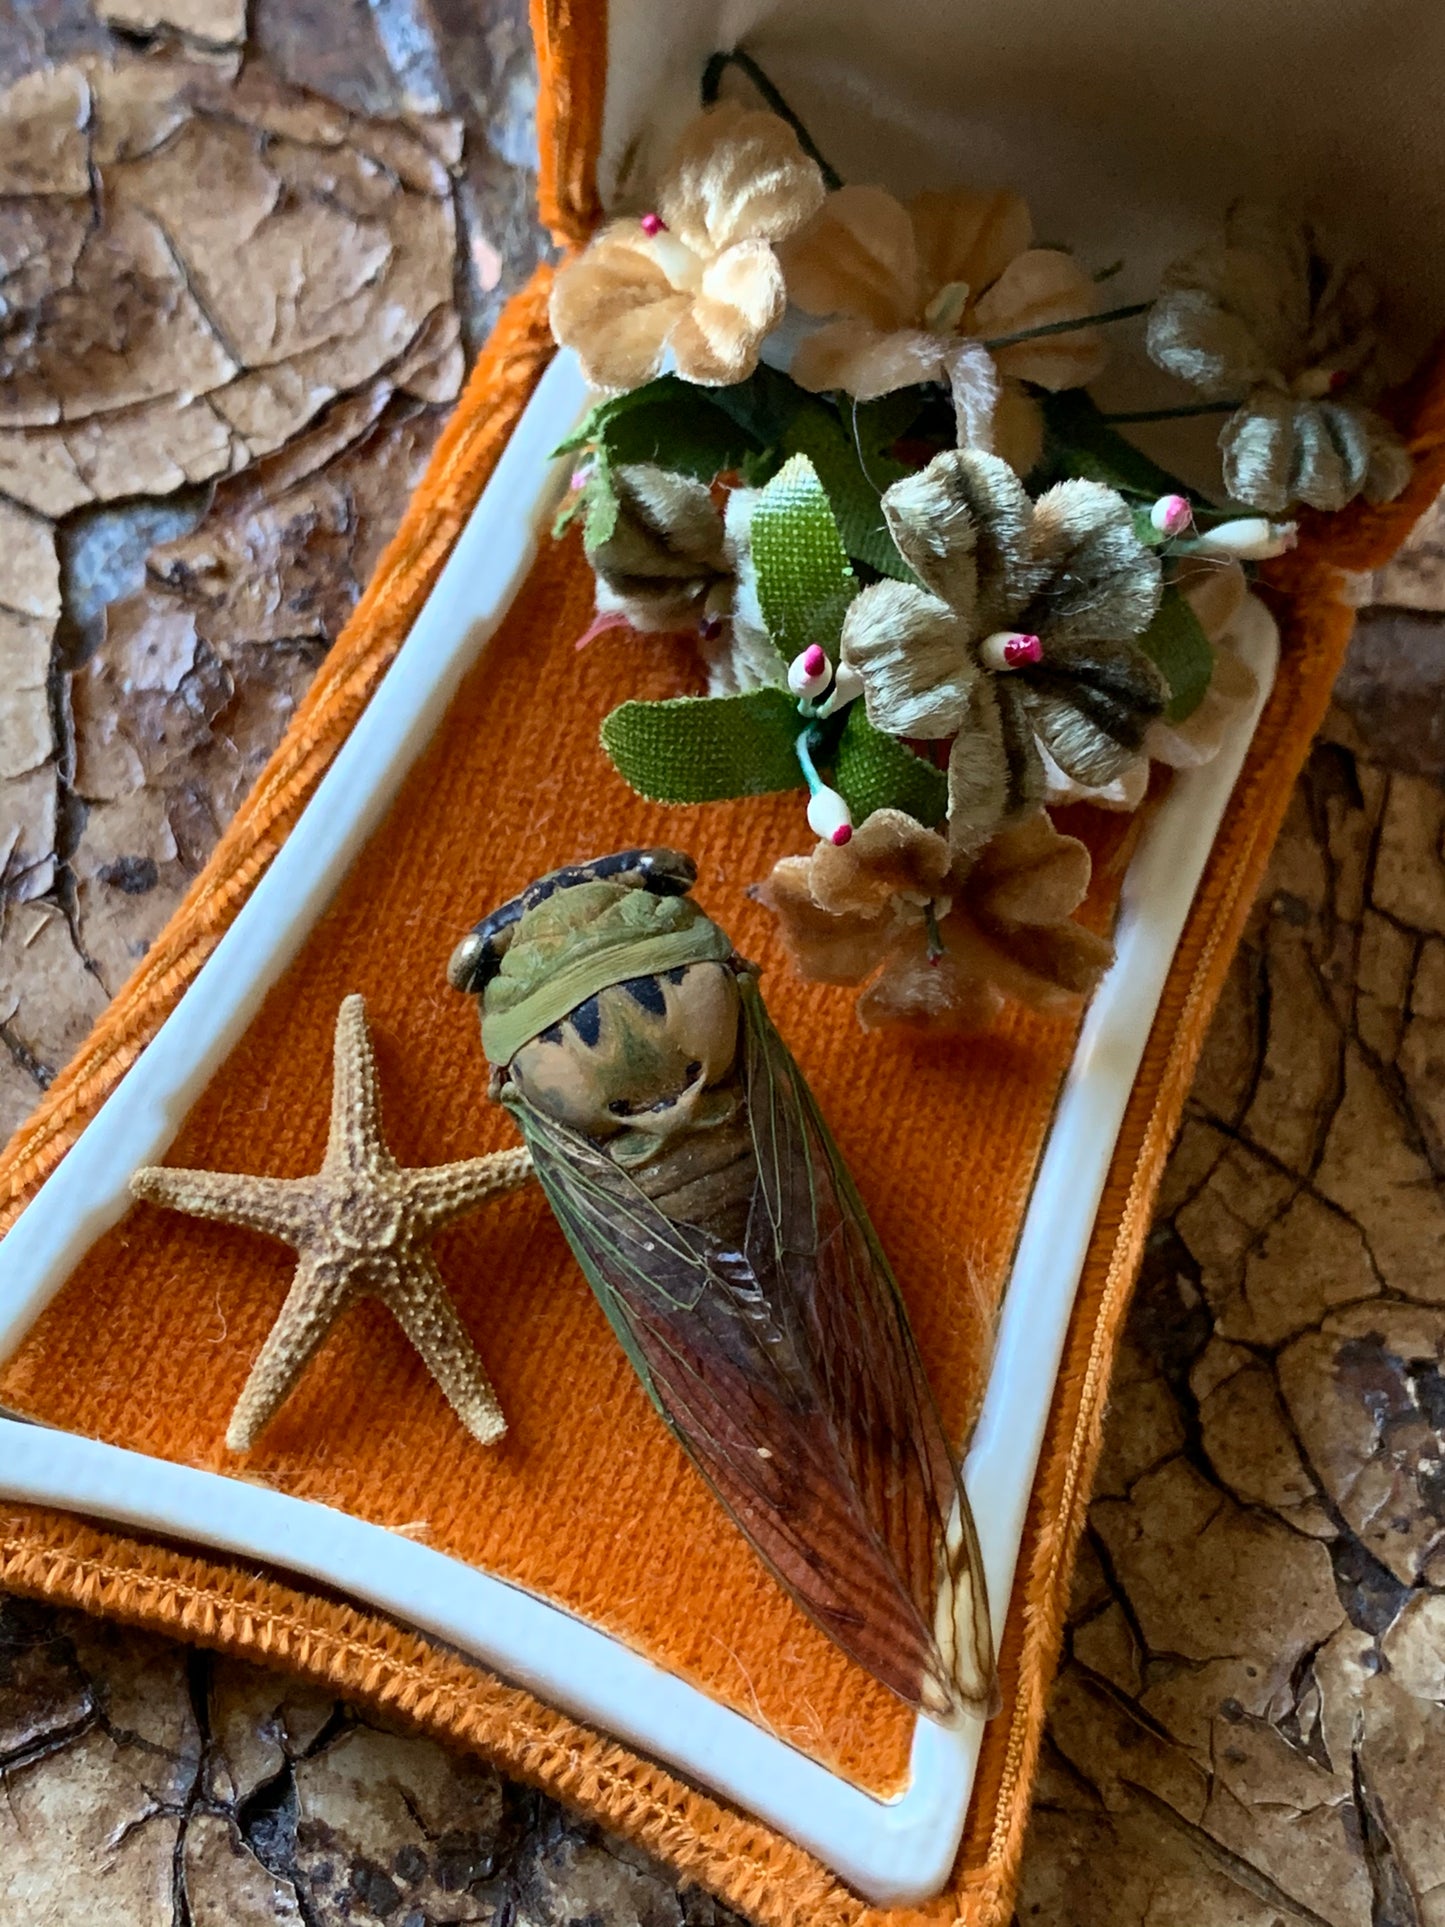 Cicada nature specimen display